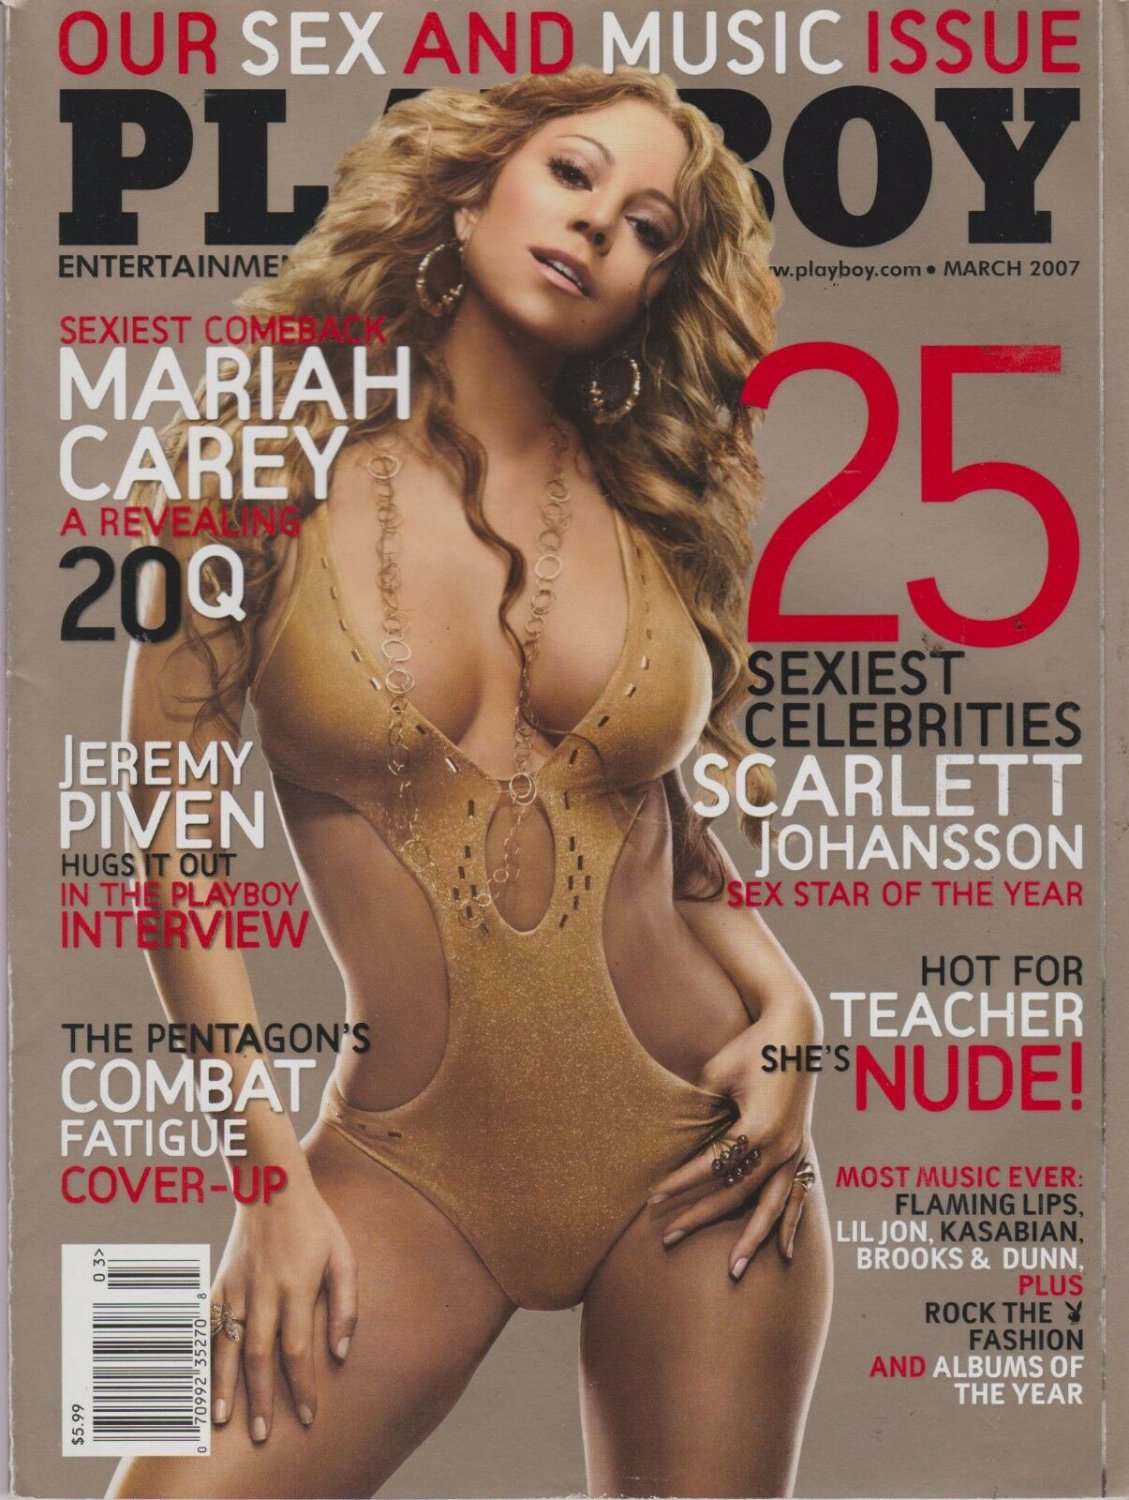 Playboy MARCH 2007-B - TYRAN RICHARD - ERICA CHEVILLAR - 25 